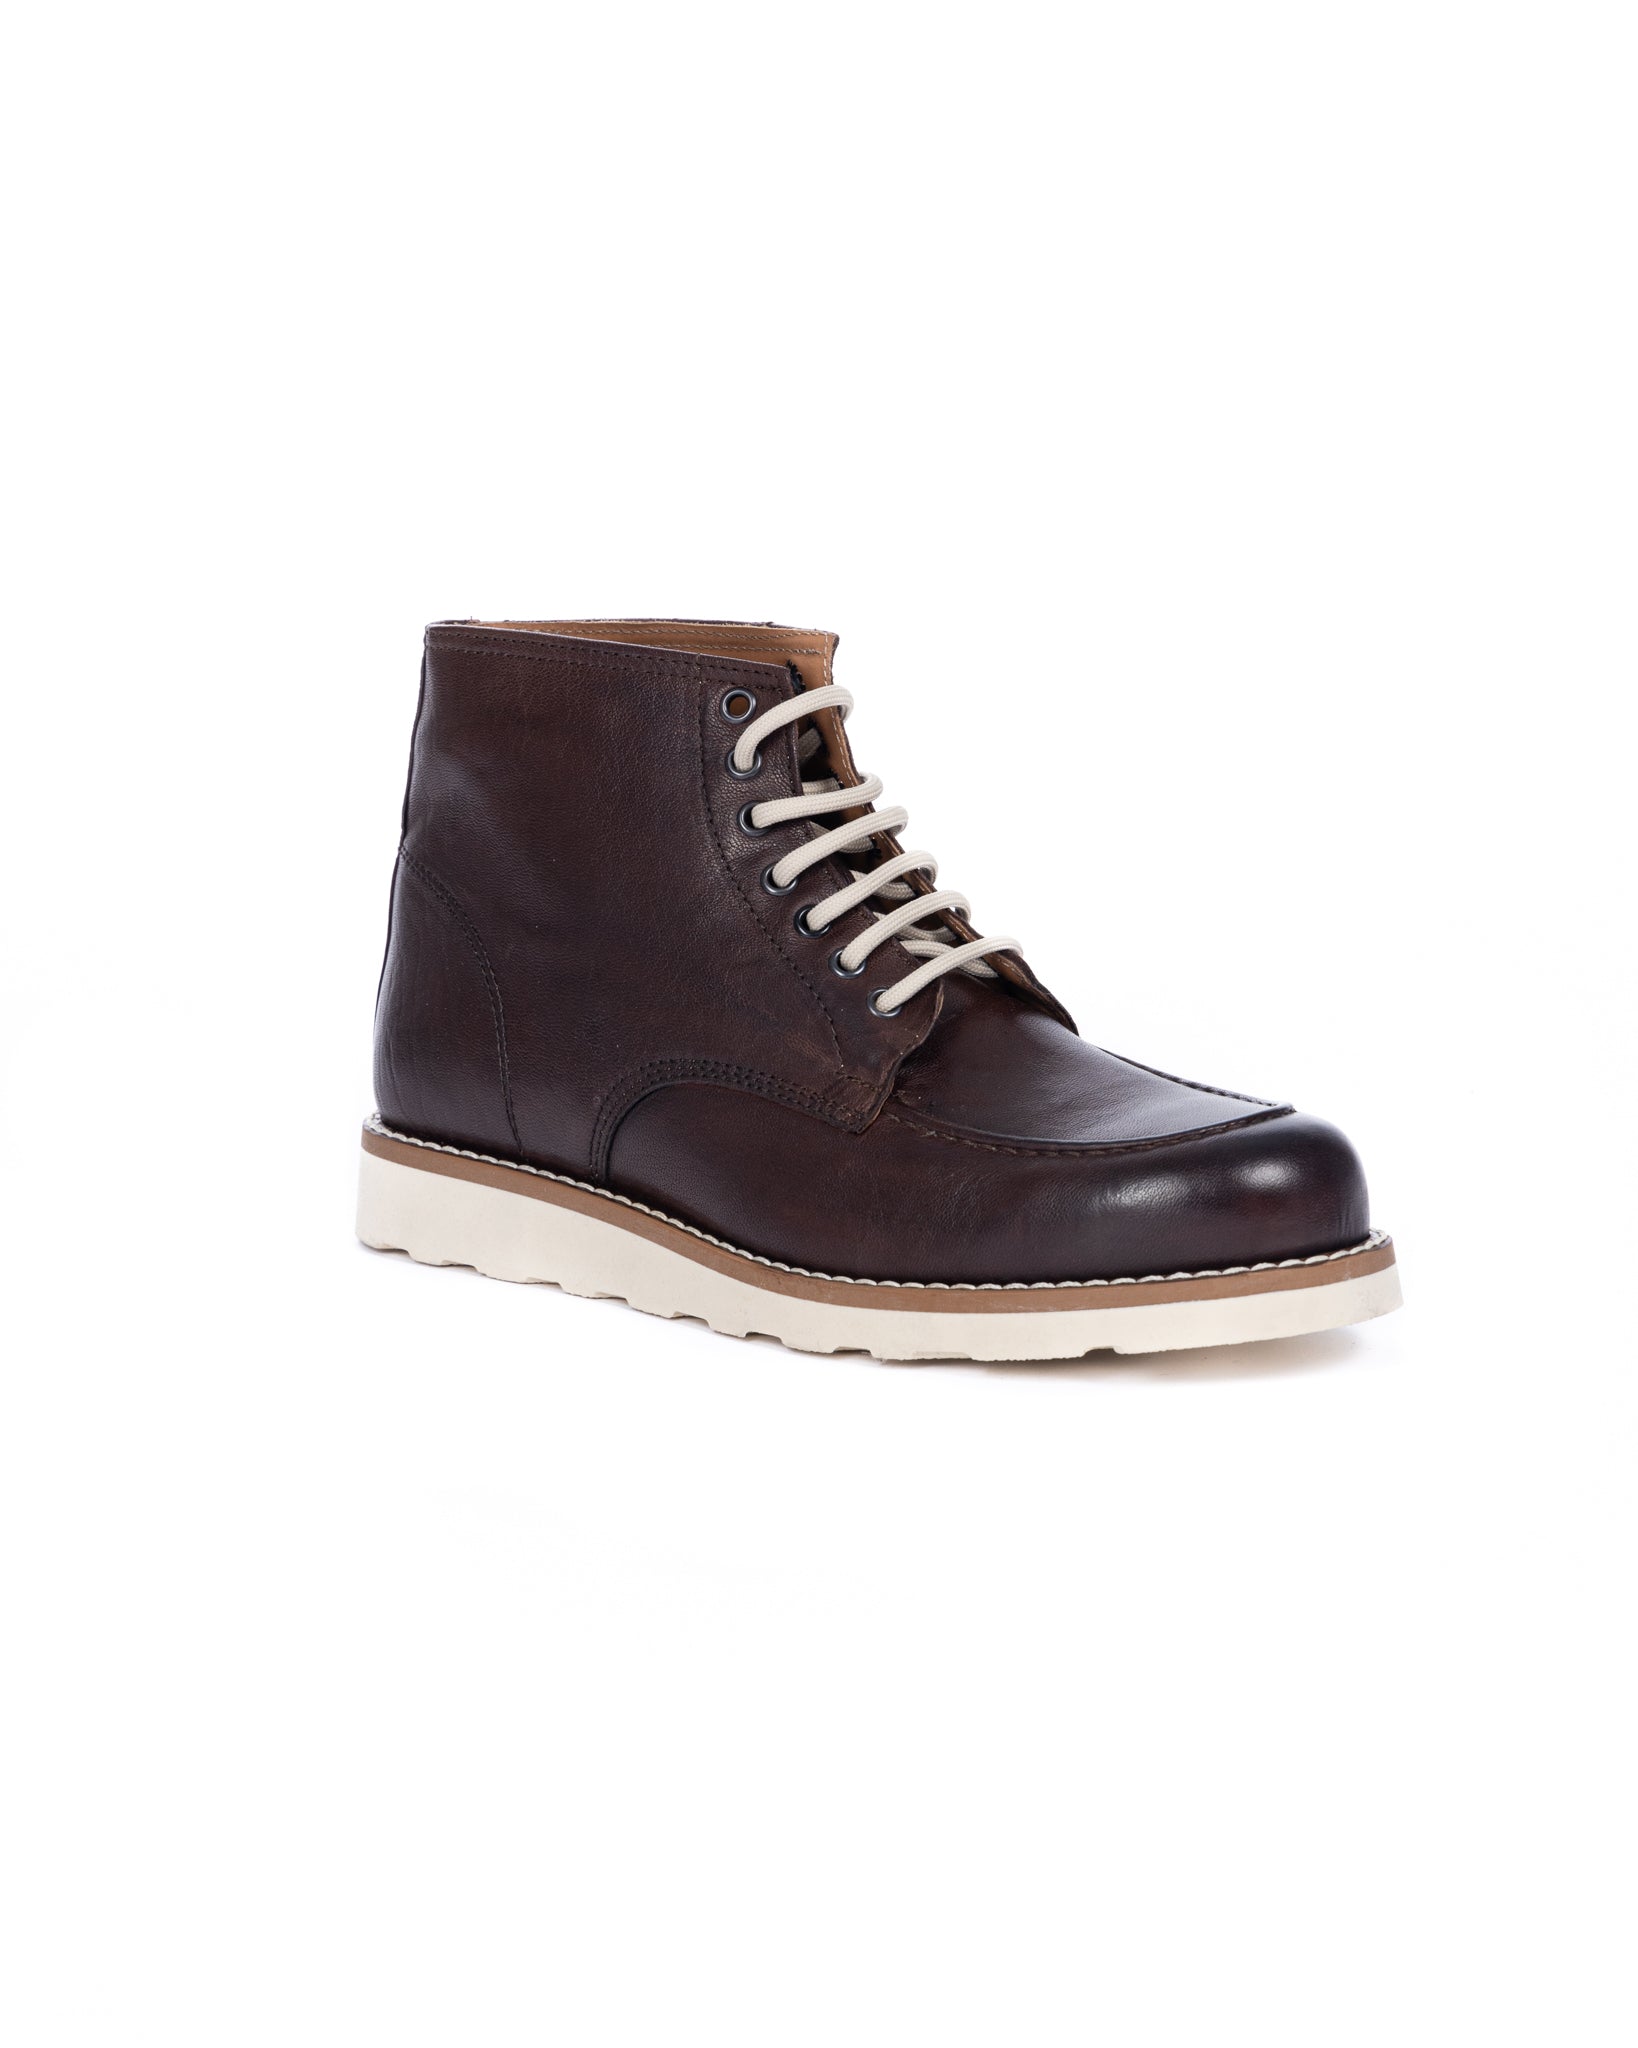 Moon - dark brown leather boot